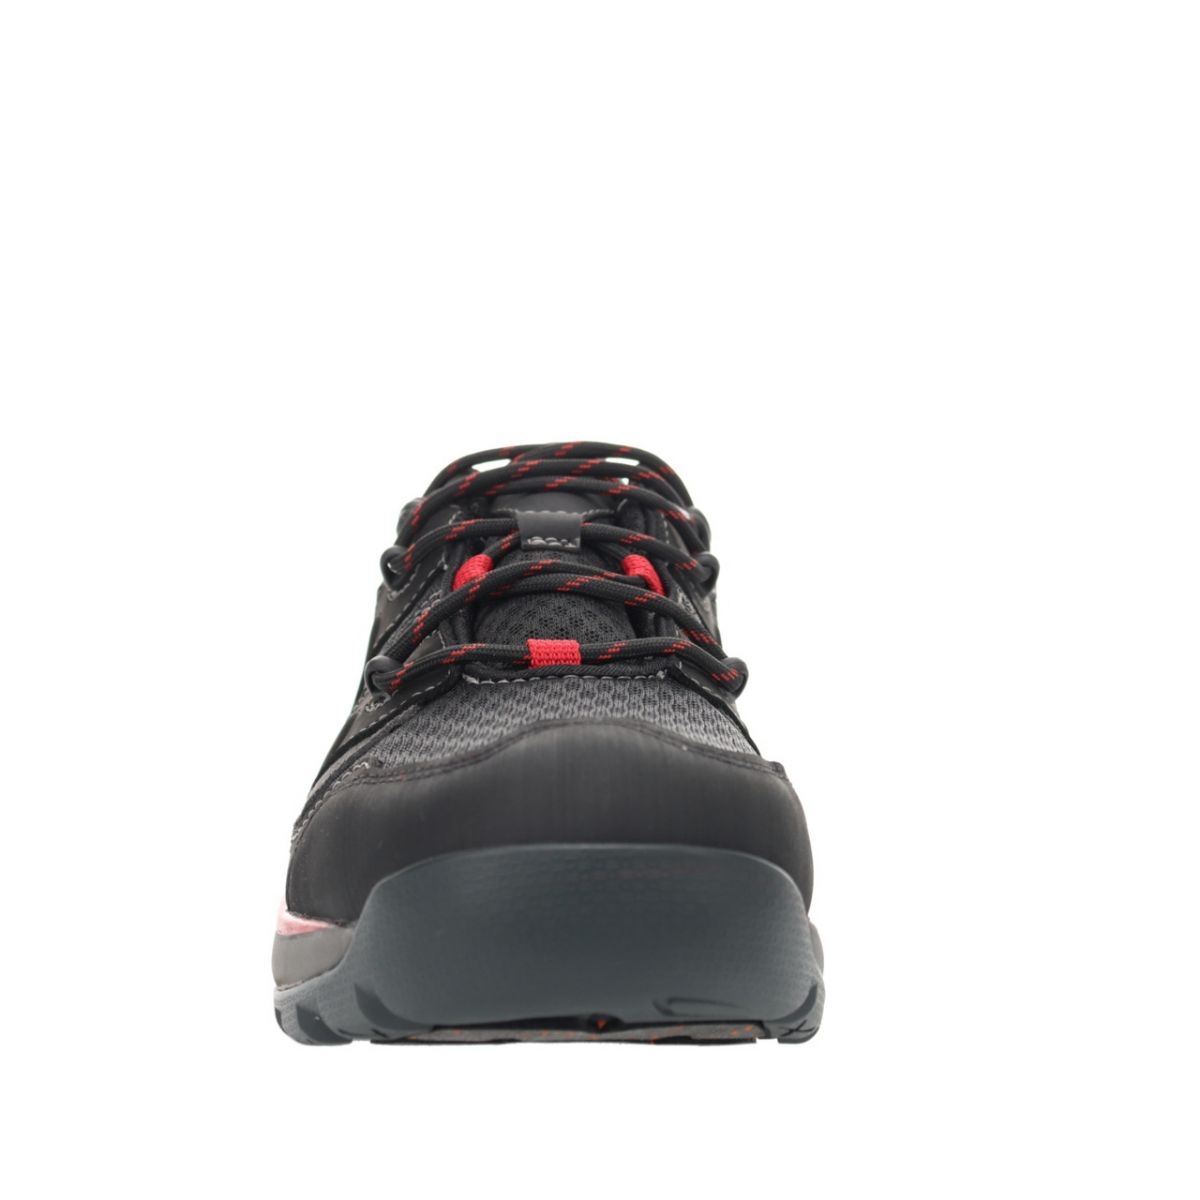 Propet Men's Vercors Hiking Shoe Black/Red - MOA002SBRD BLACK/RED - BLACK/RED, 11.5 XX-Wide